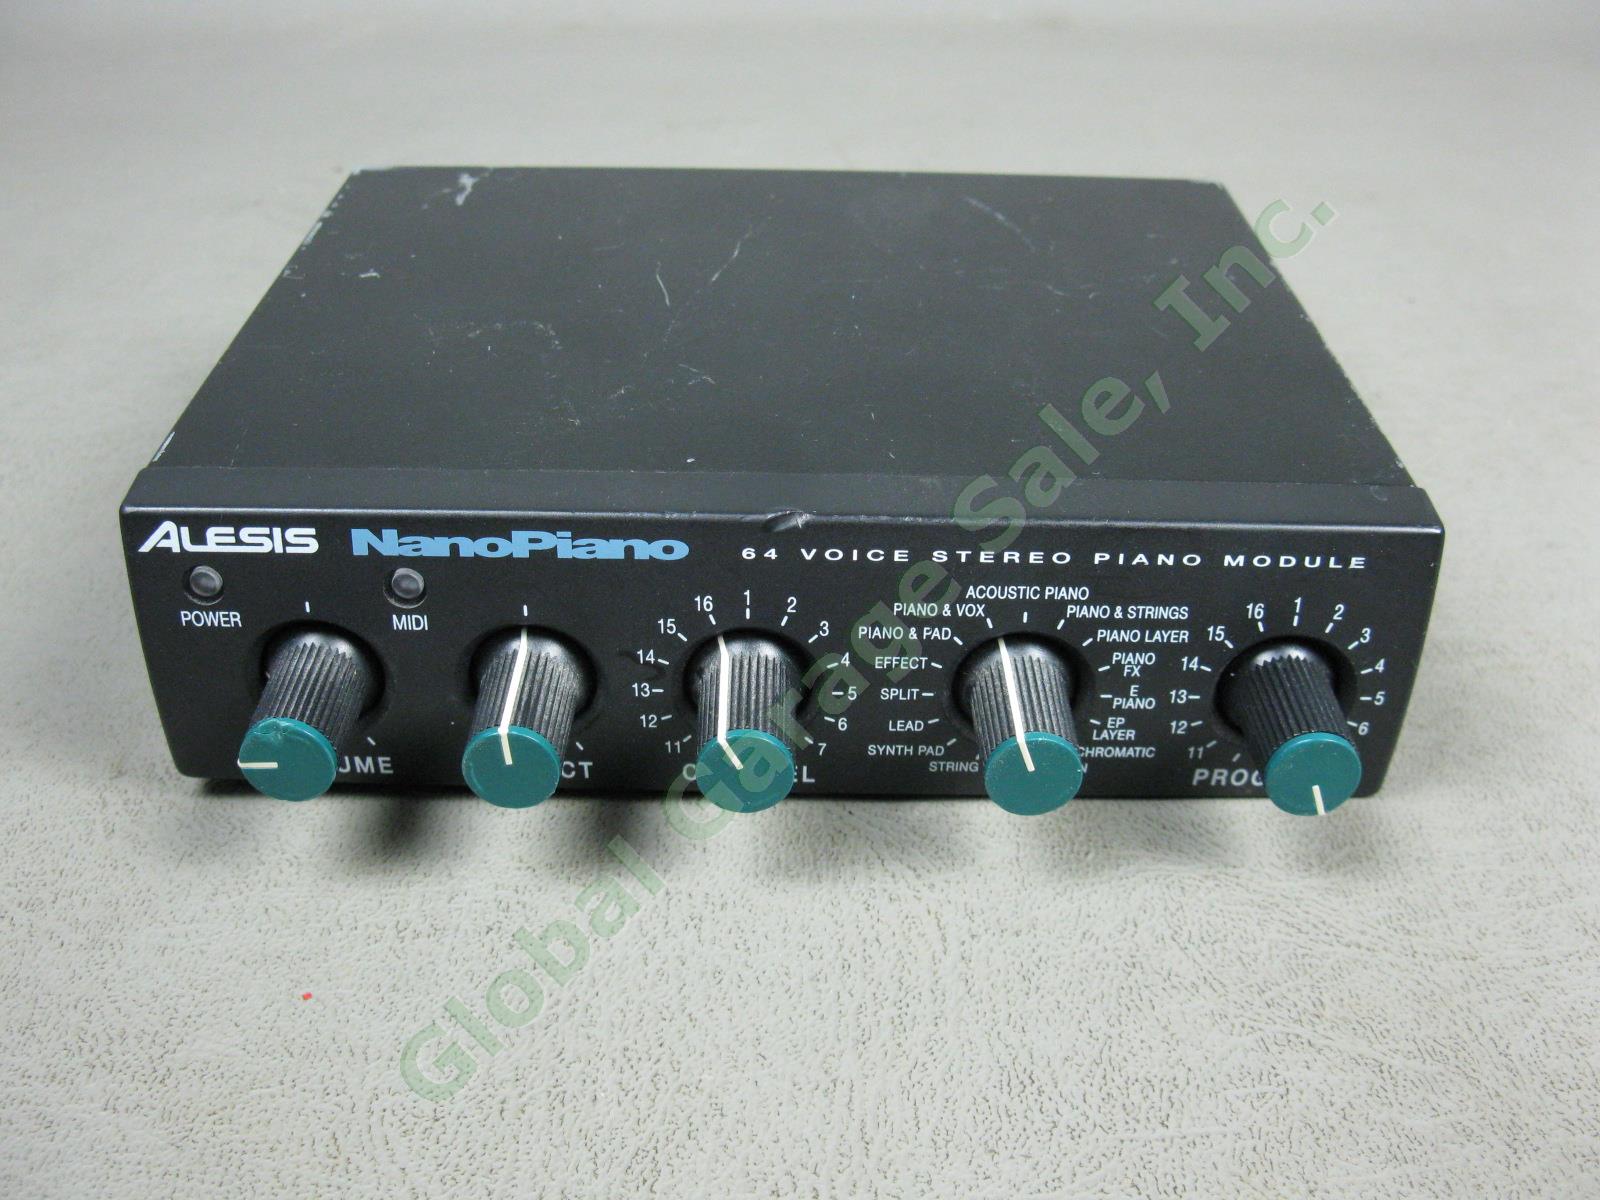 Alesis Nano Piano 64 Voice Stereo MIDI QS Keyboard Synth Module + AC Adapter Lot 1